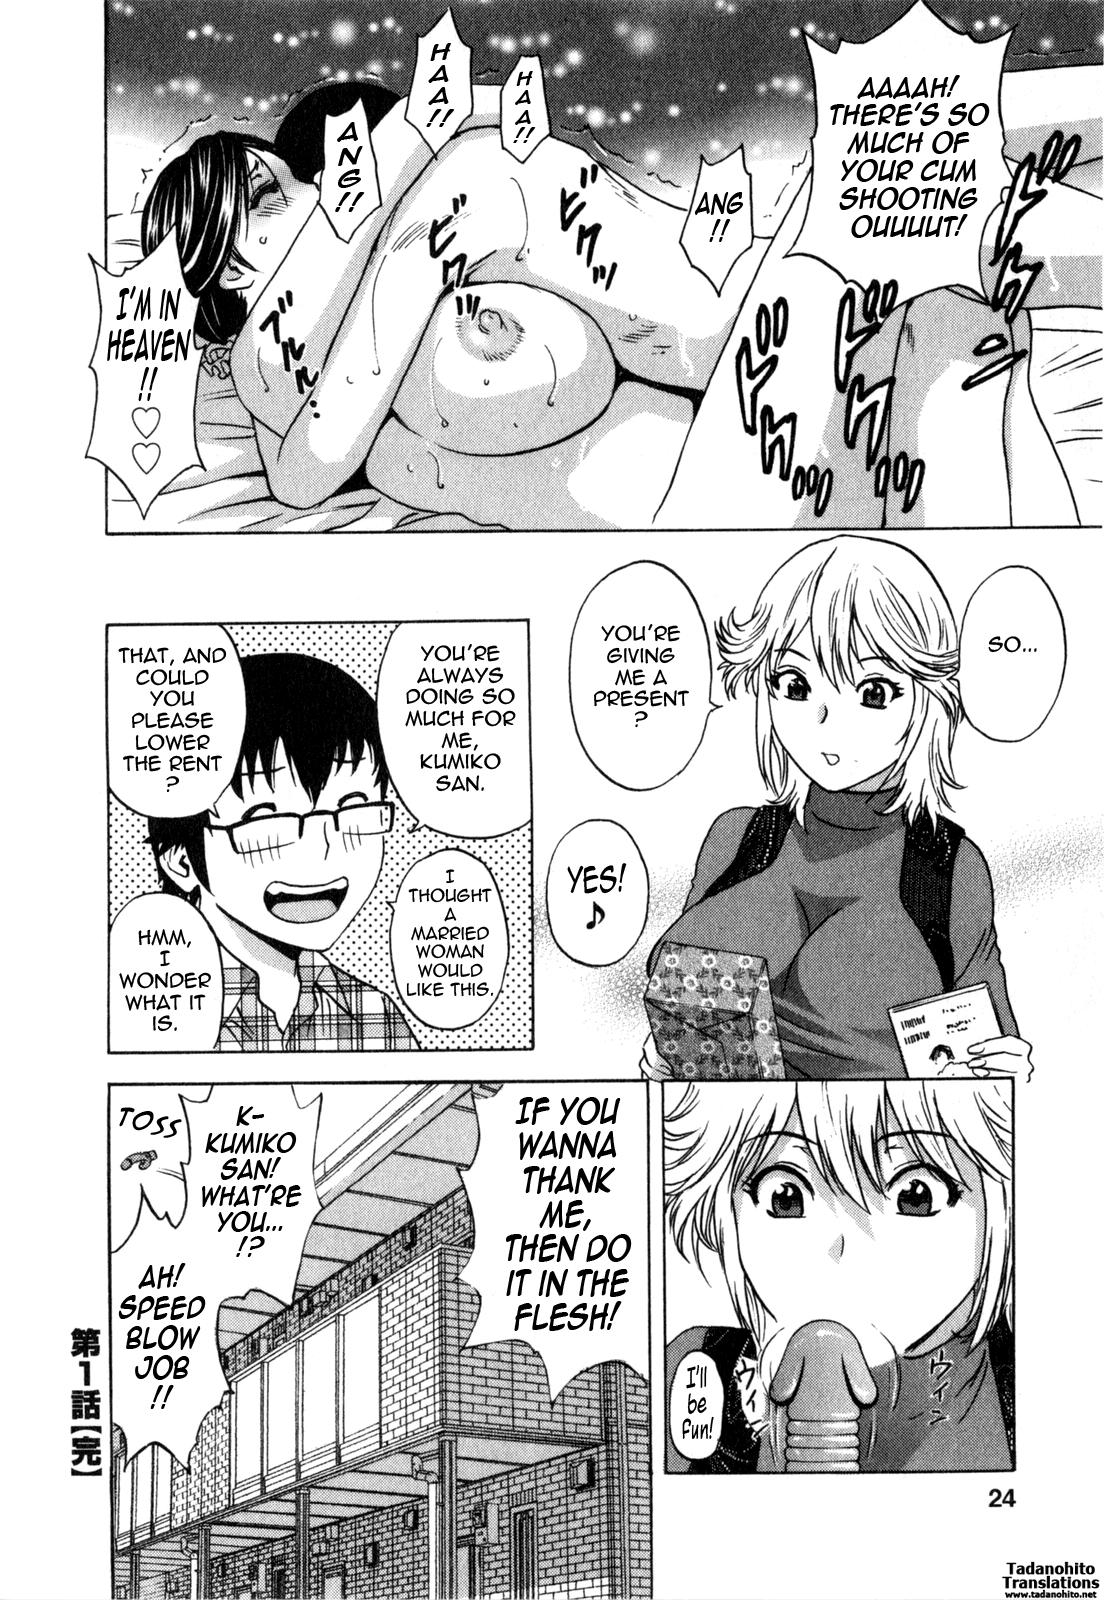 [Hidemaru] Life with Married Women Just Like a Manga 3 - Ch. 1-8 [English] {Tadanohito} 26